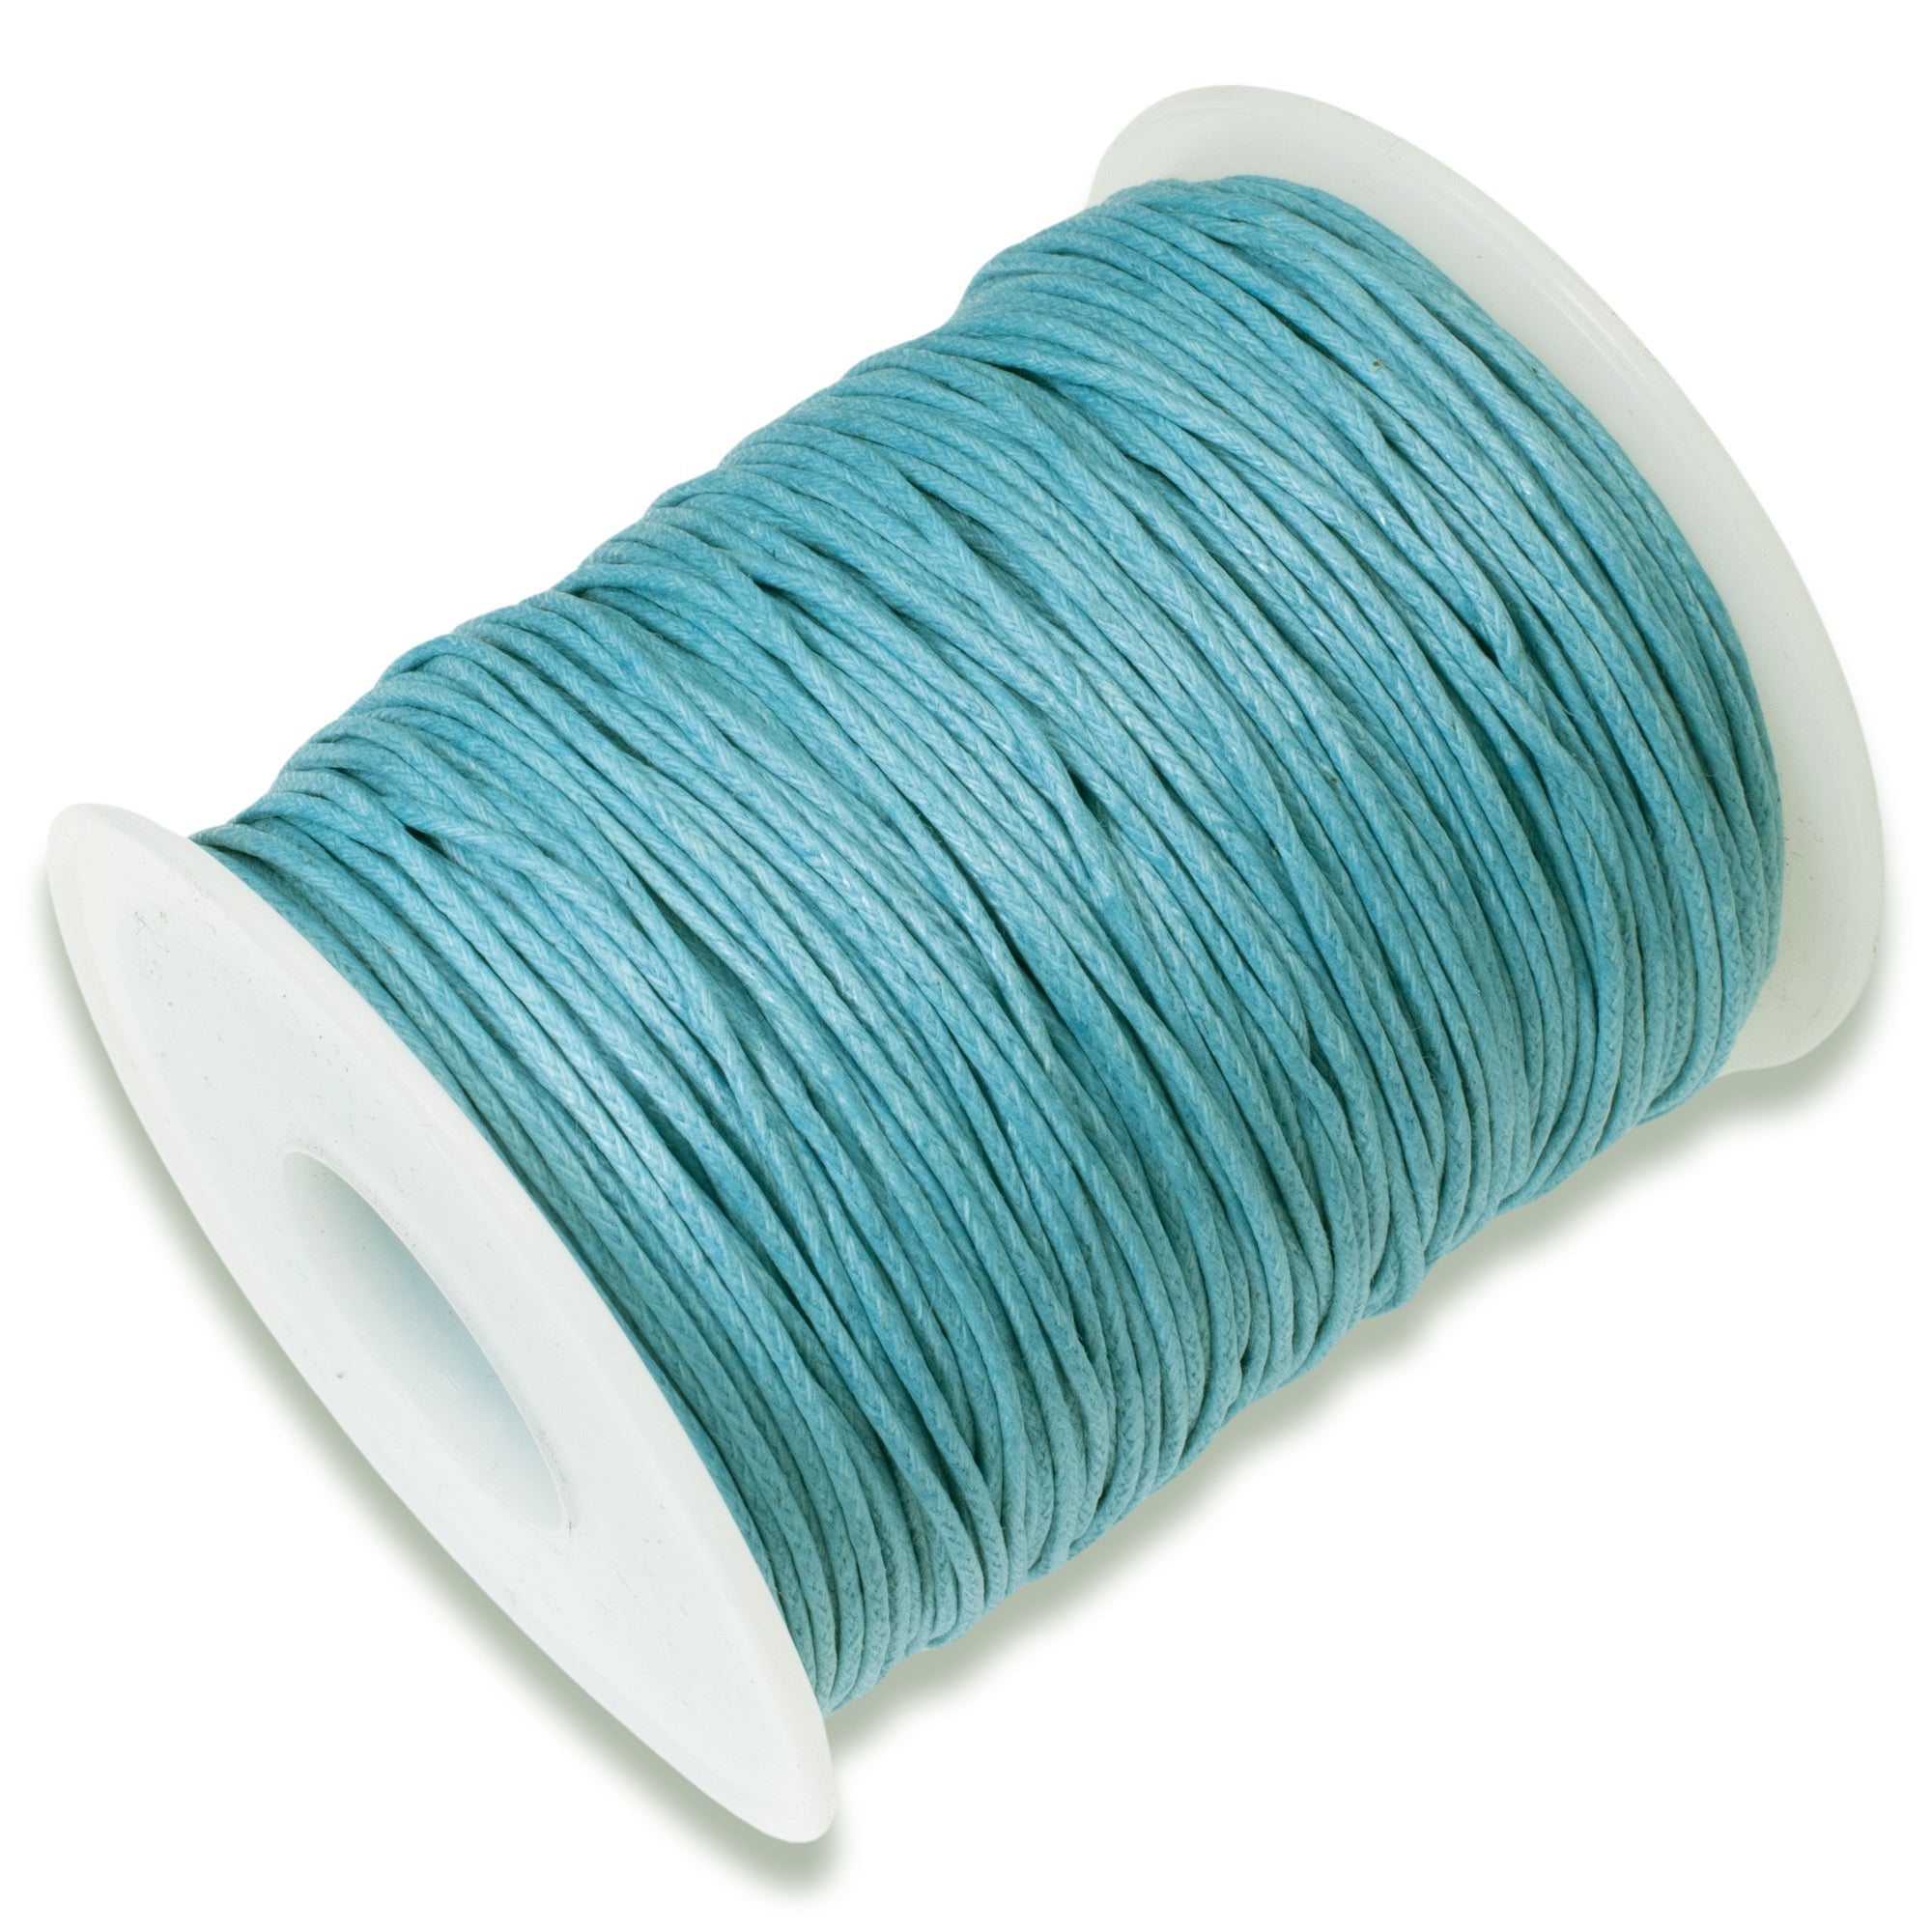 deep ocean blue waxed Brazilian cord, knotting twine, craft cord, waxed cord,  blue cord, waxed cord